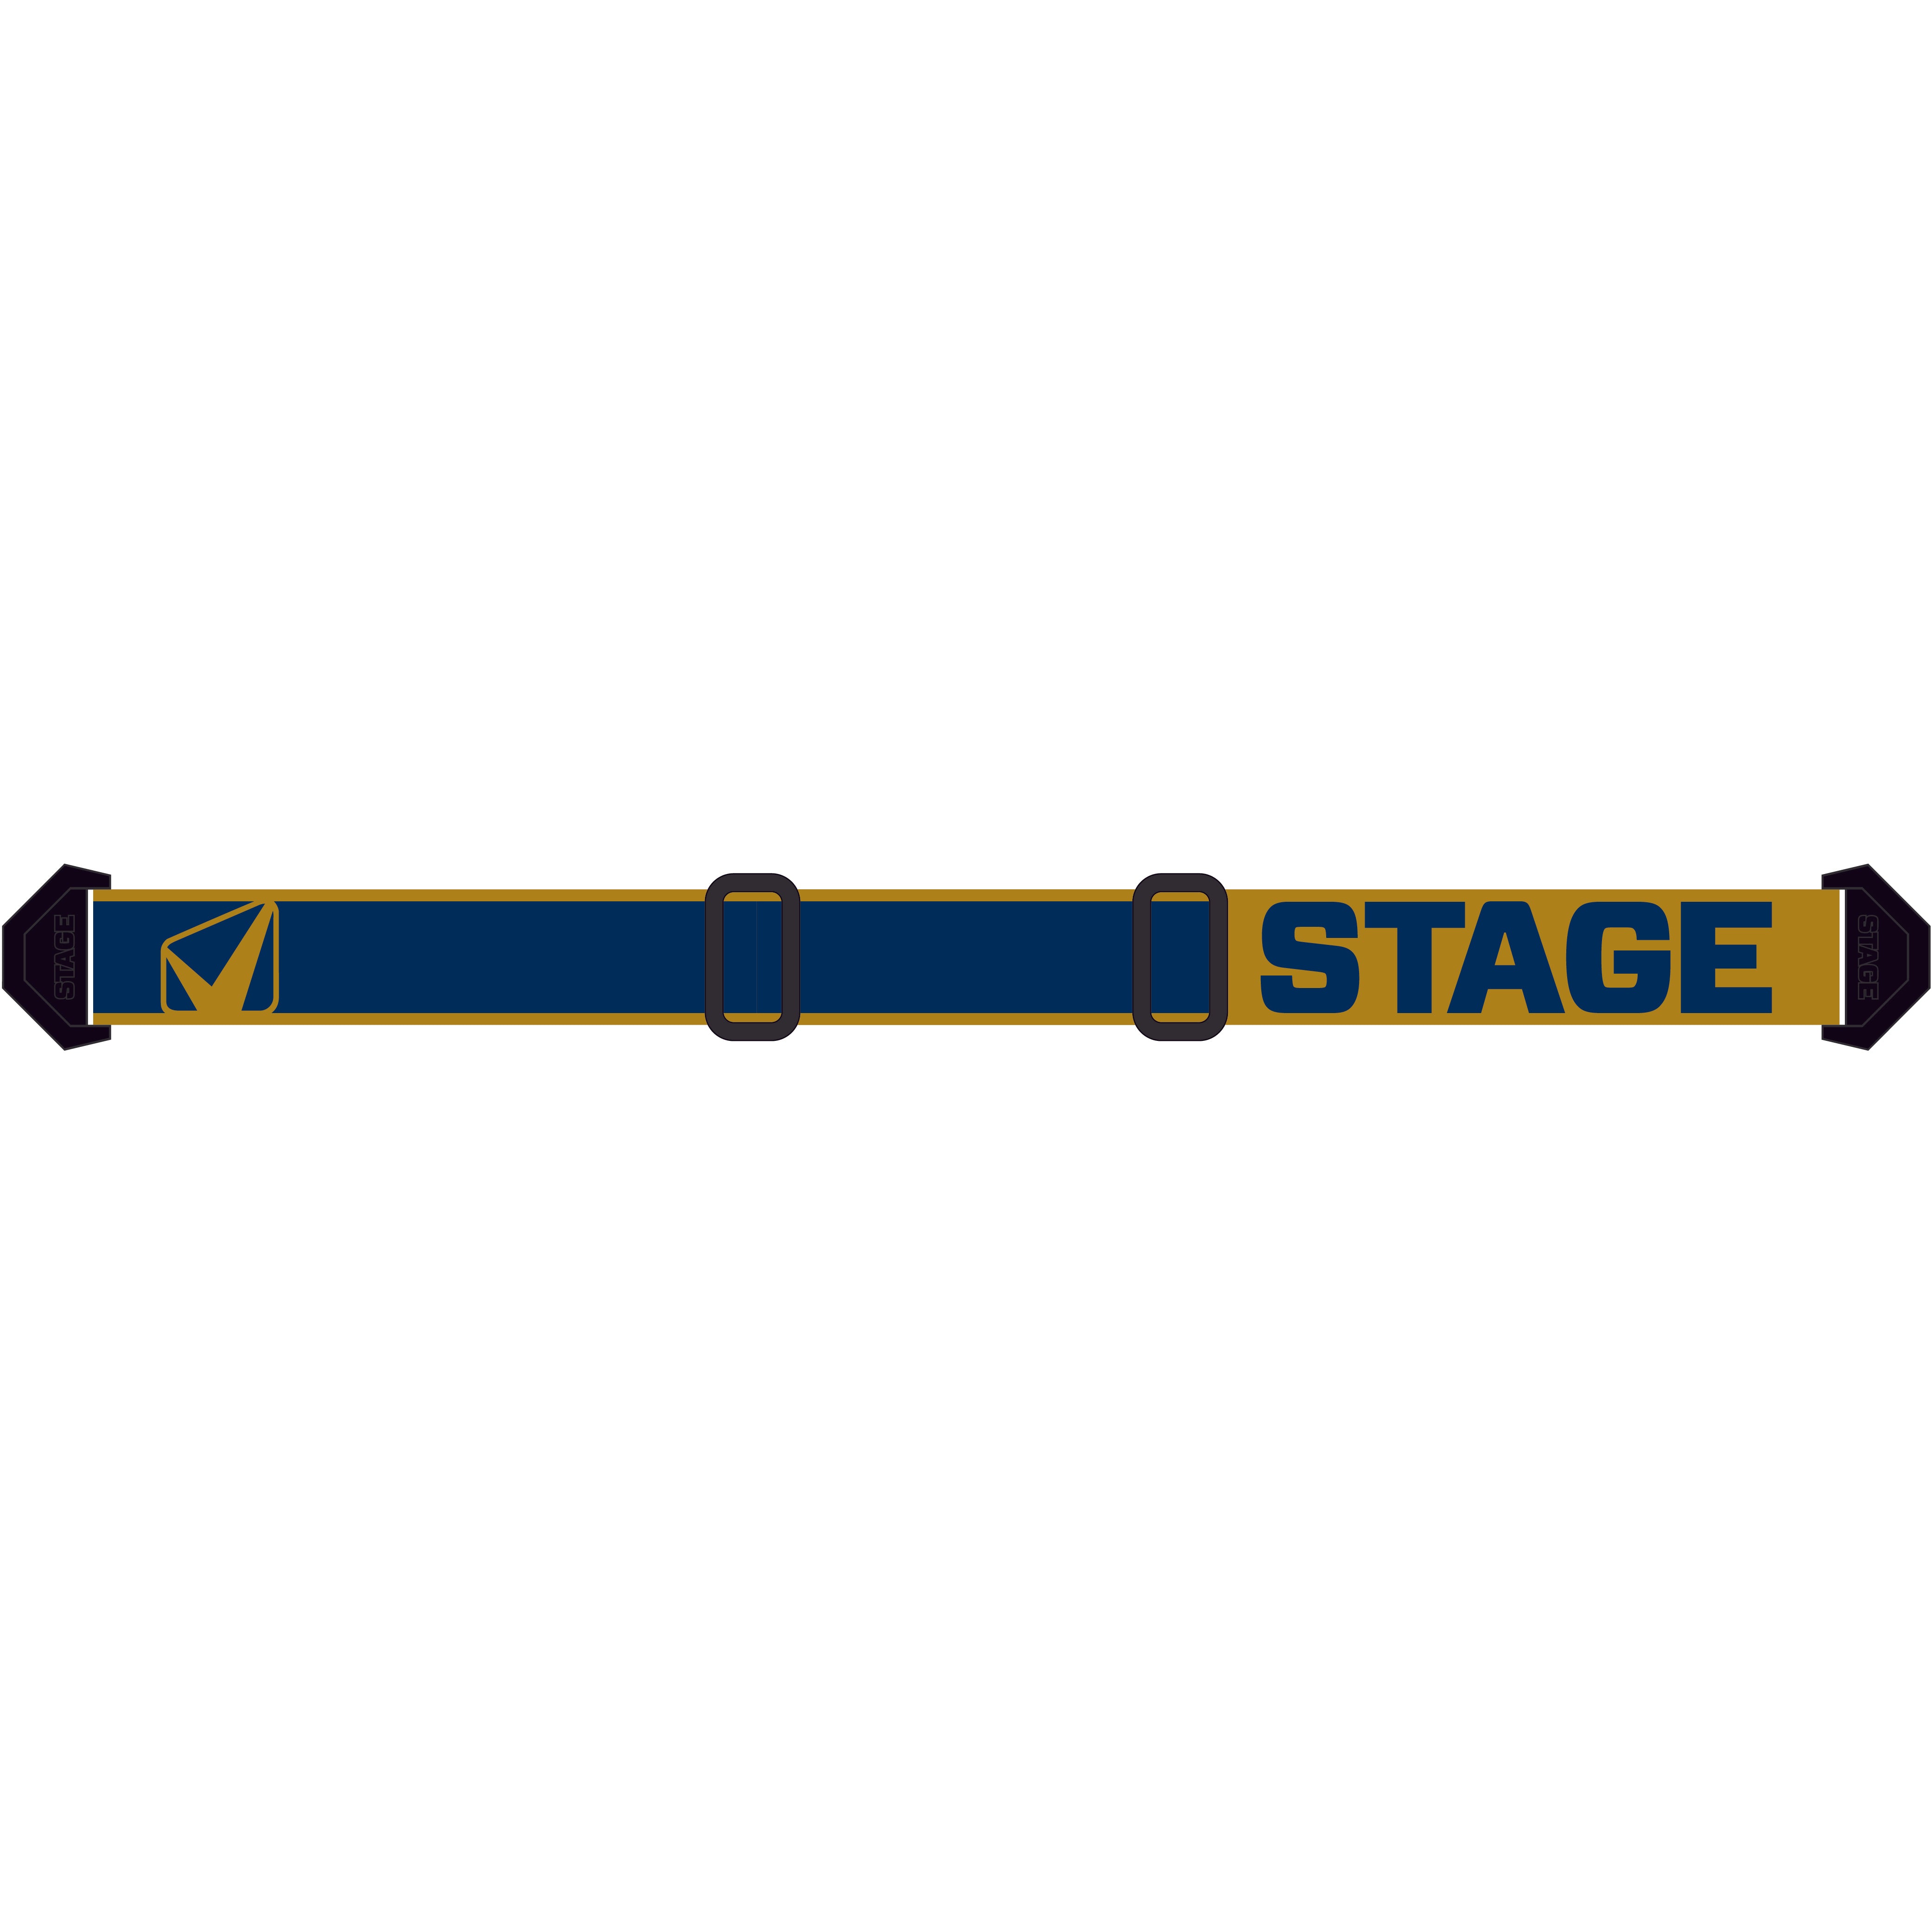 StageStuntStrap-MustardBlue.jpg